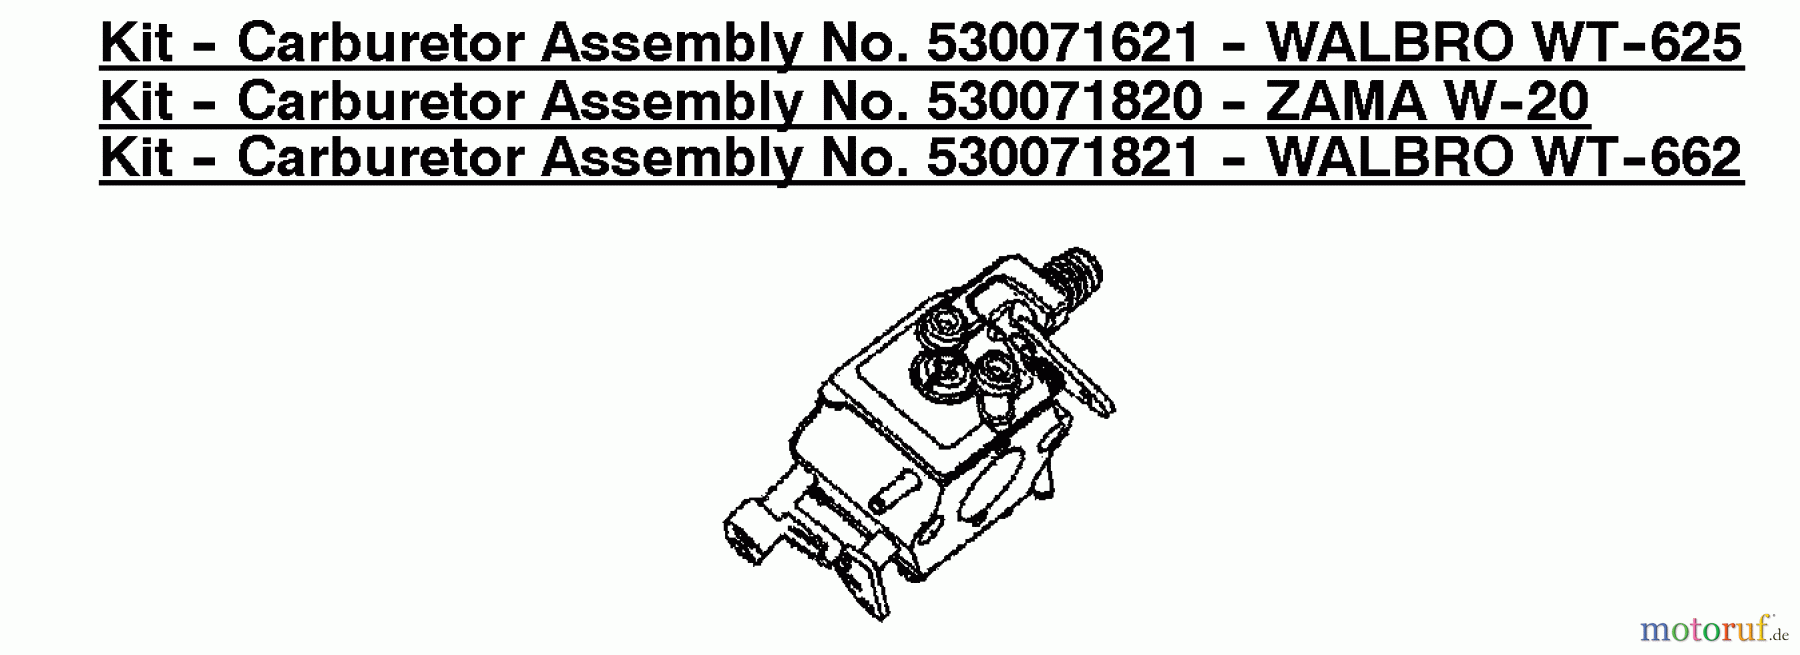  Poulan / Weed Eater Motorsägen PP260 (Type 2) - Poulan Pro Chainsaw Kit - Carburetor Assembly